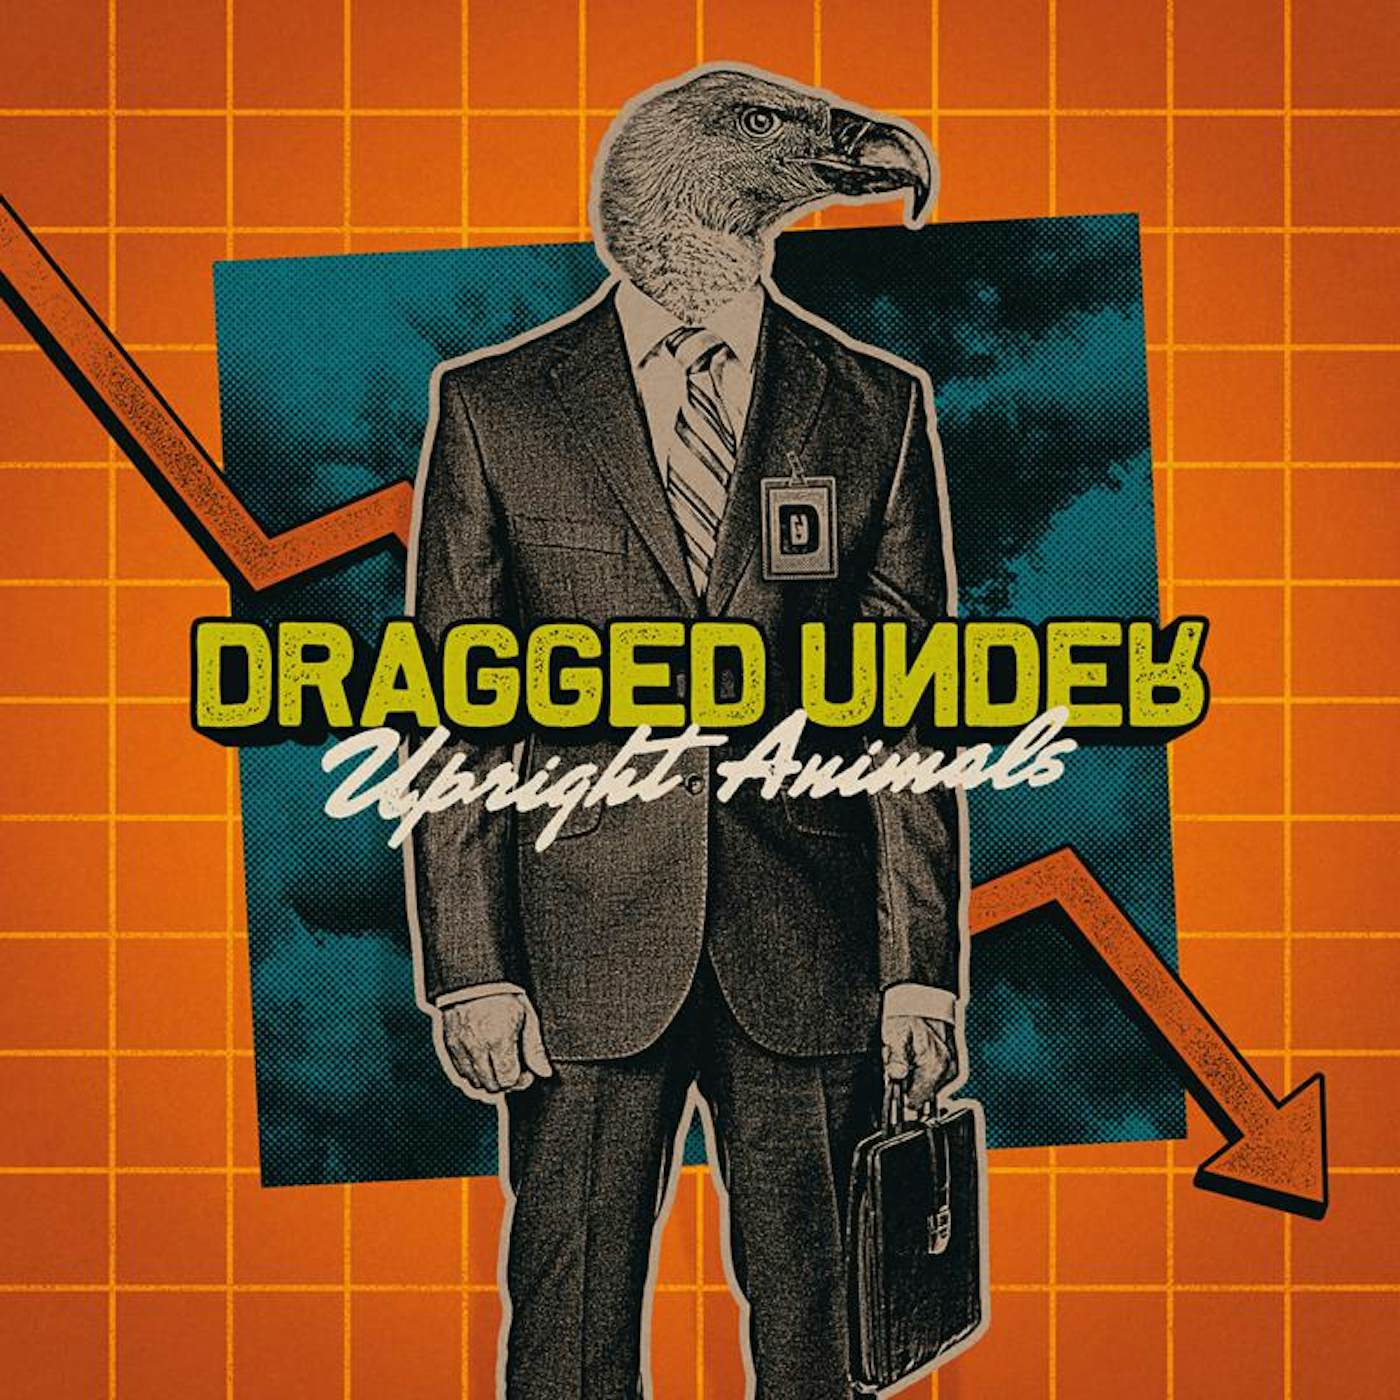 Dragged Under LP - Upright Animals (Vinyl)